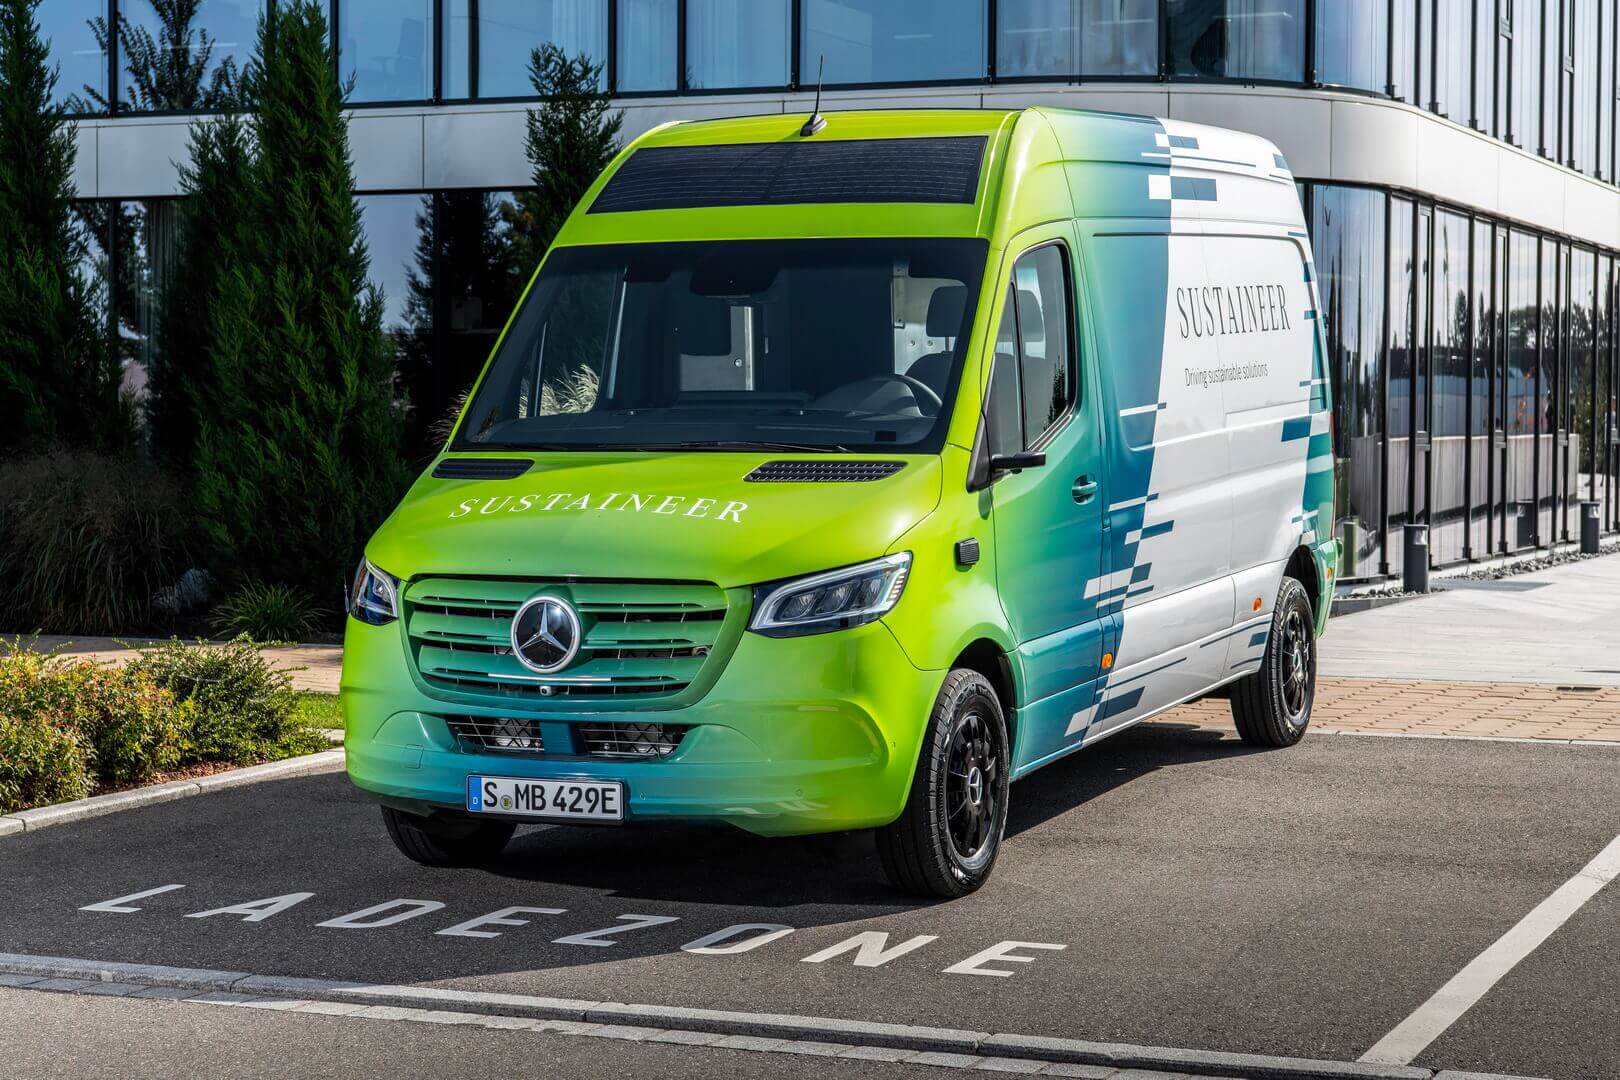 Mercedes-Benz представил экологичный фургон будущего «Sustaineer»